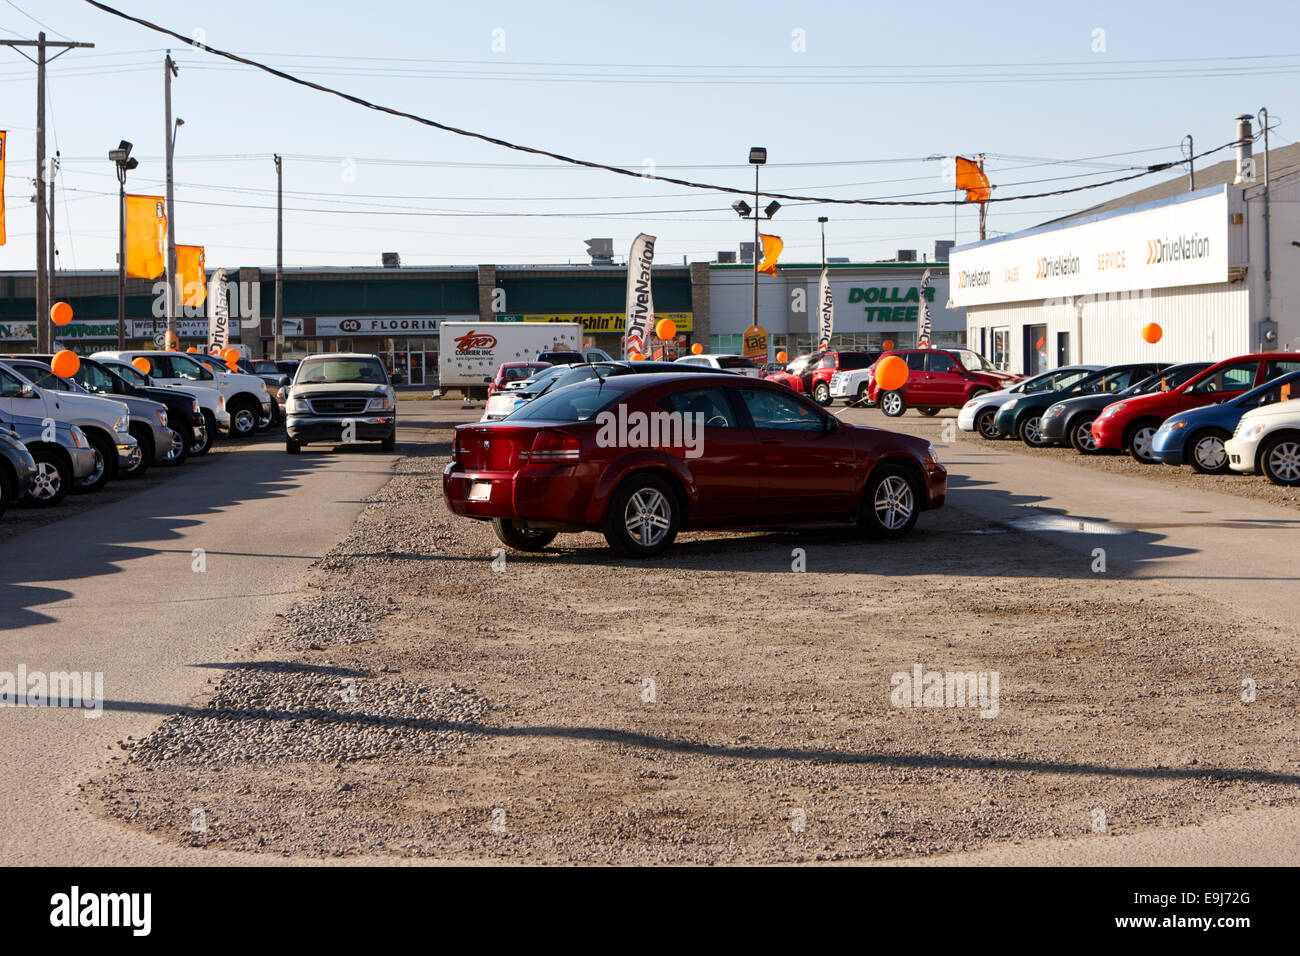 used car lot Saskatchewan Canada Stock Photo